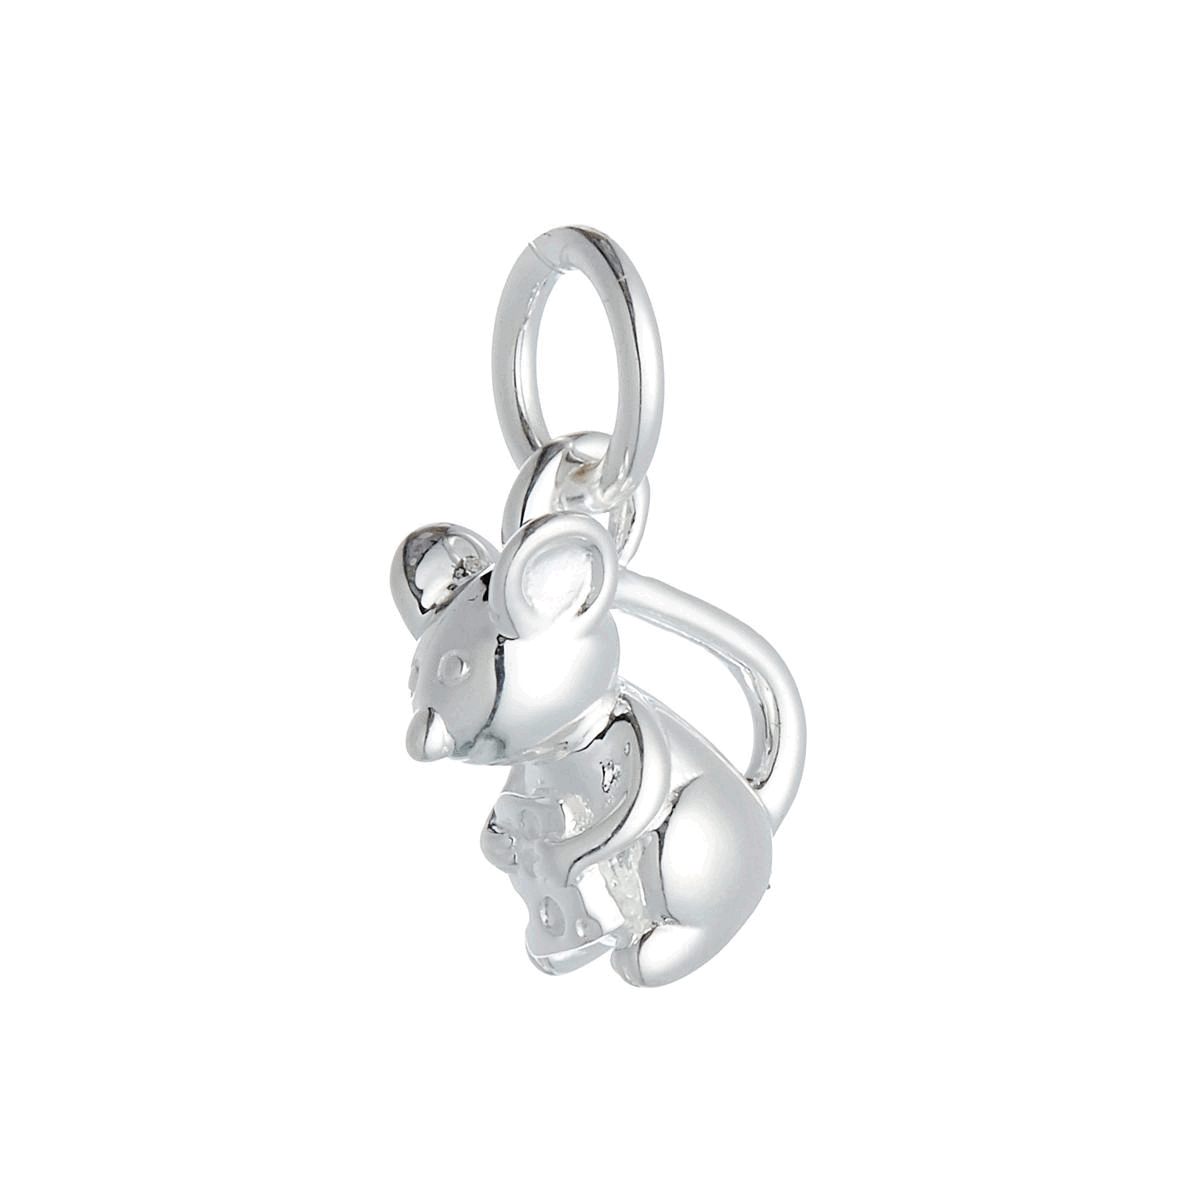 Mouse Silver Charm by Scarlett Jewellery